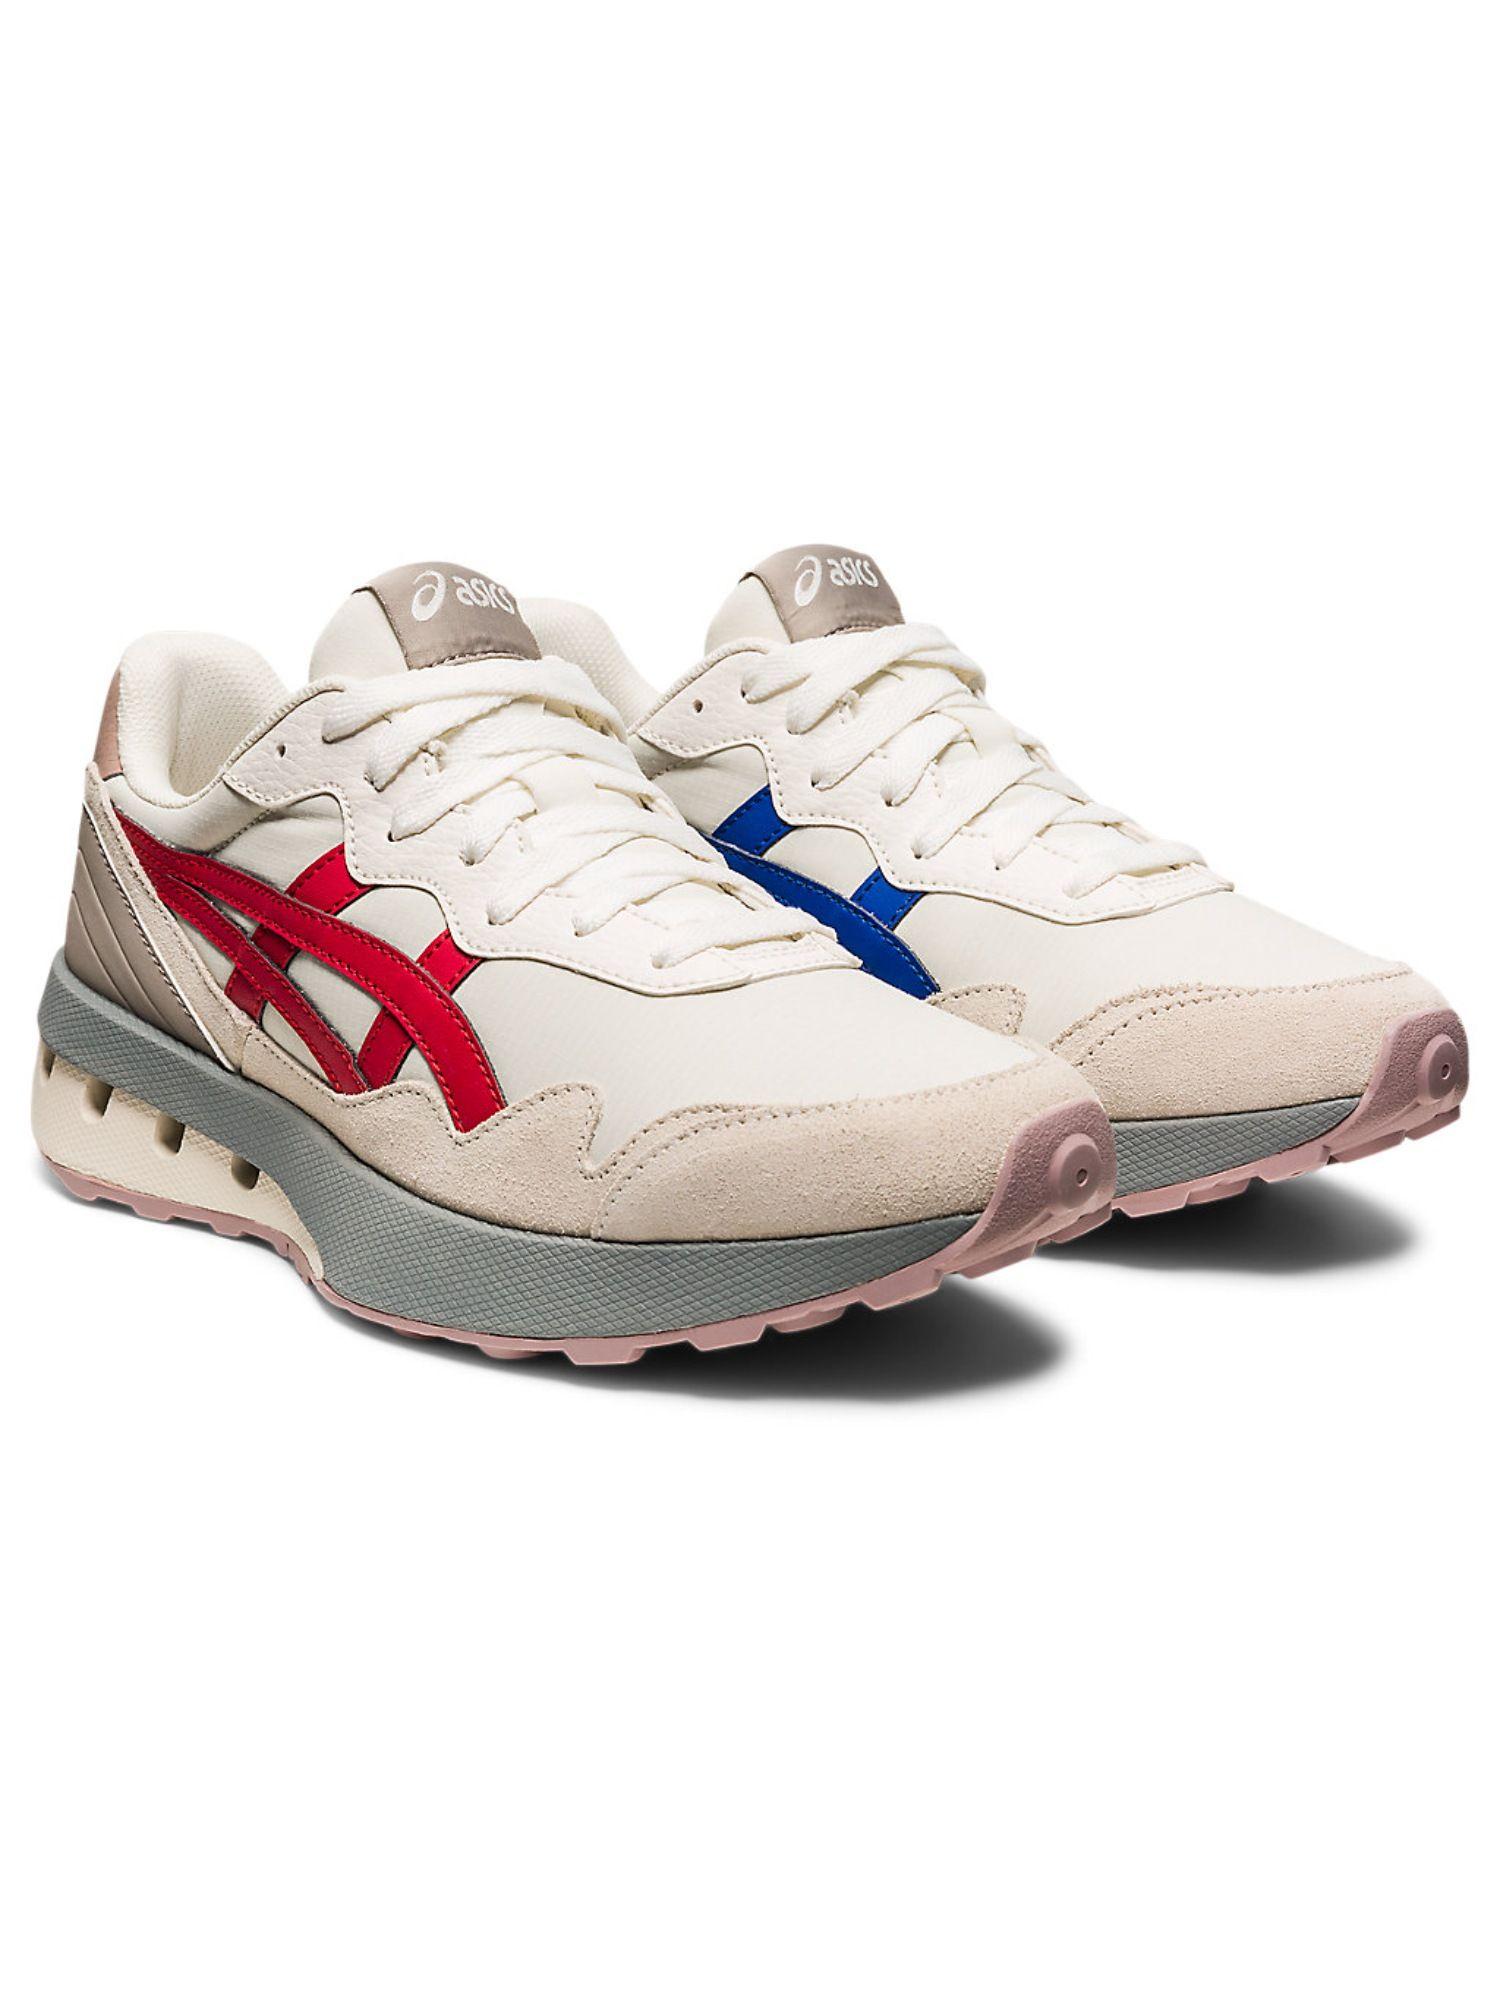 jogger-x81-cream-mens-standard-width-sneakers